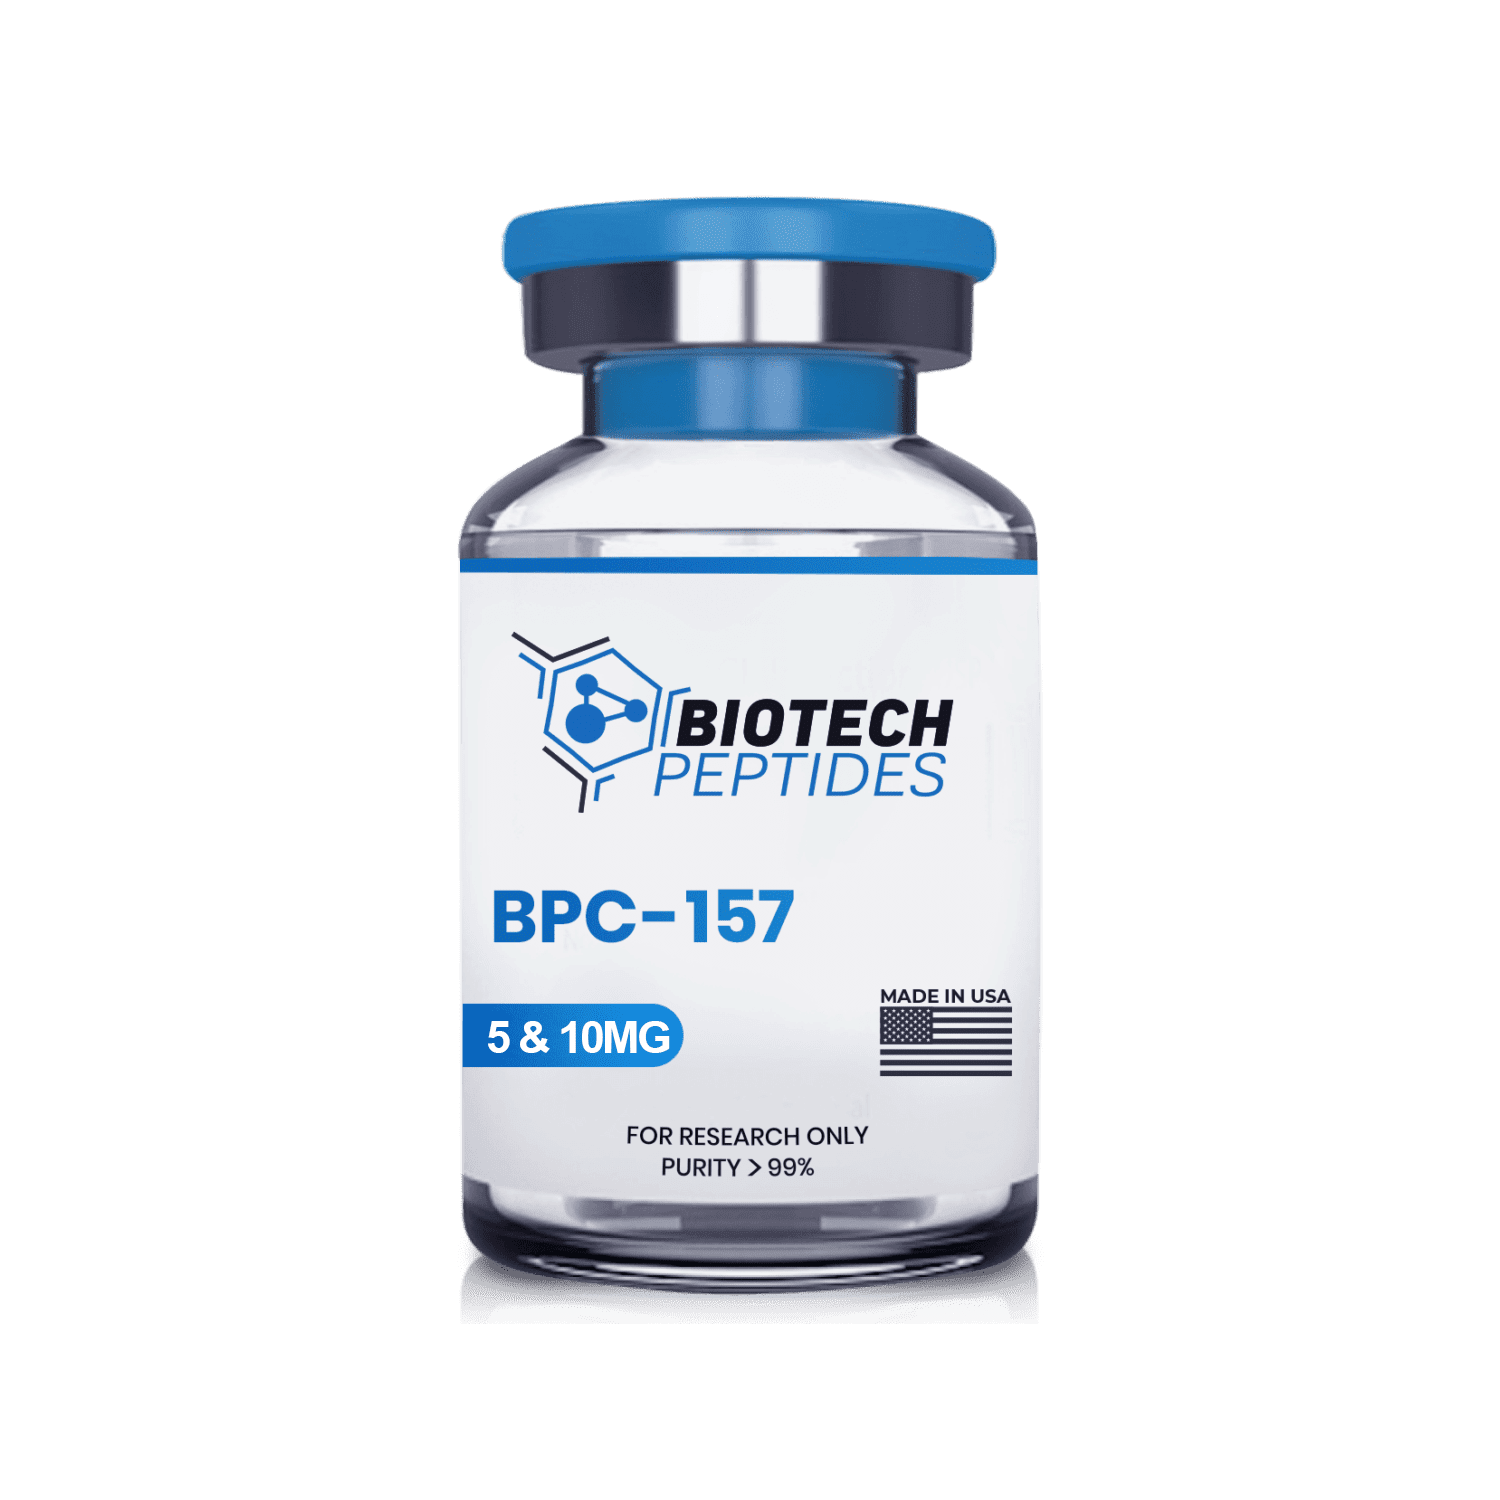 Buy BPC-157 (5mg) - Biotech Peptides